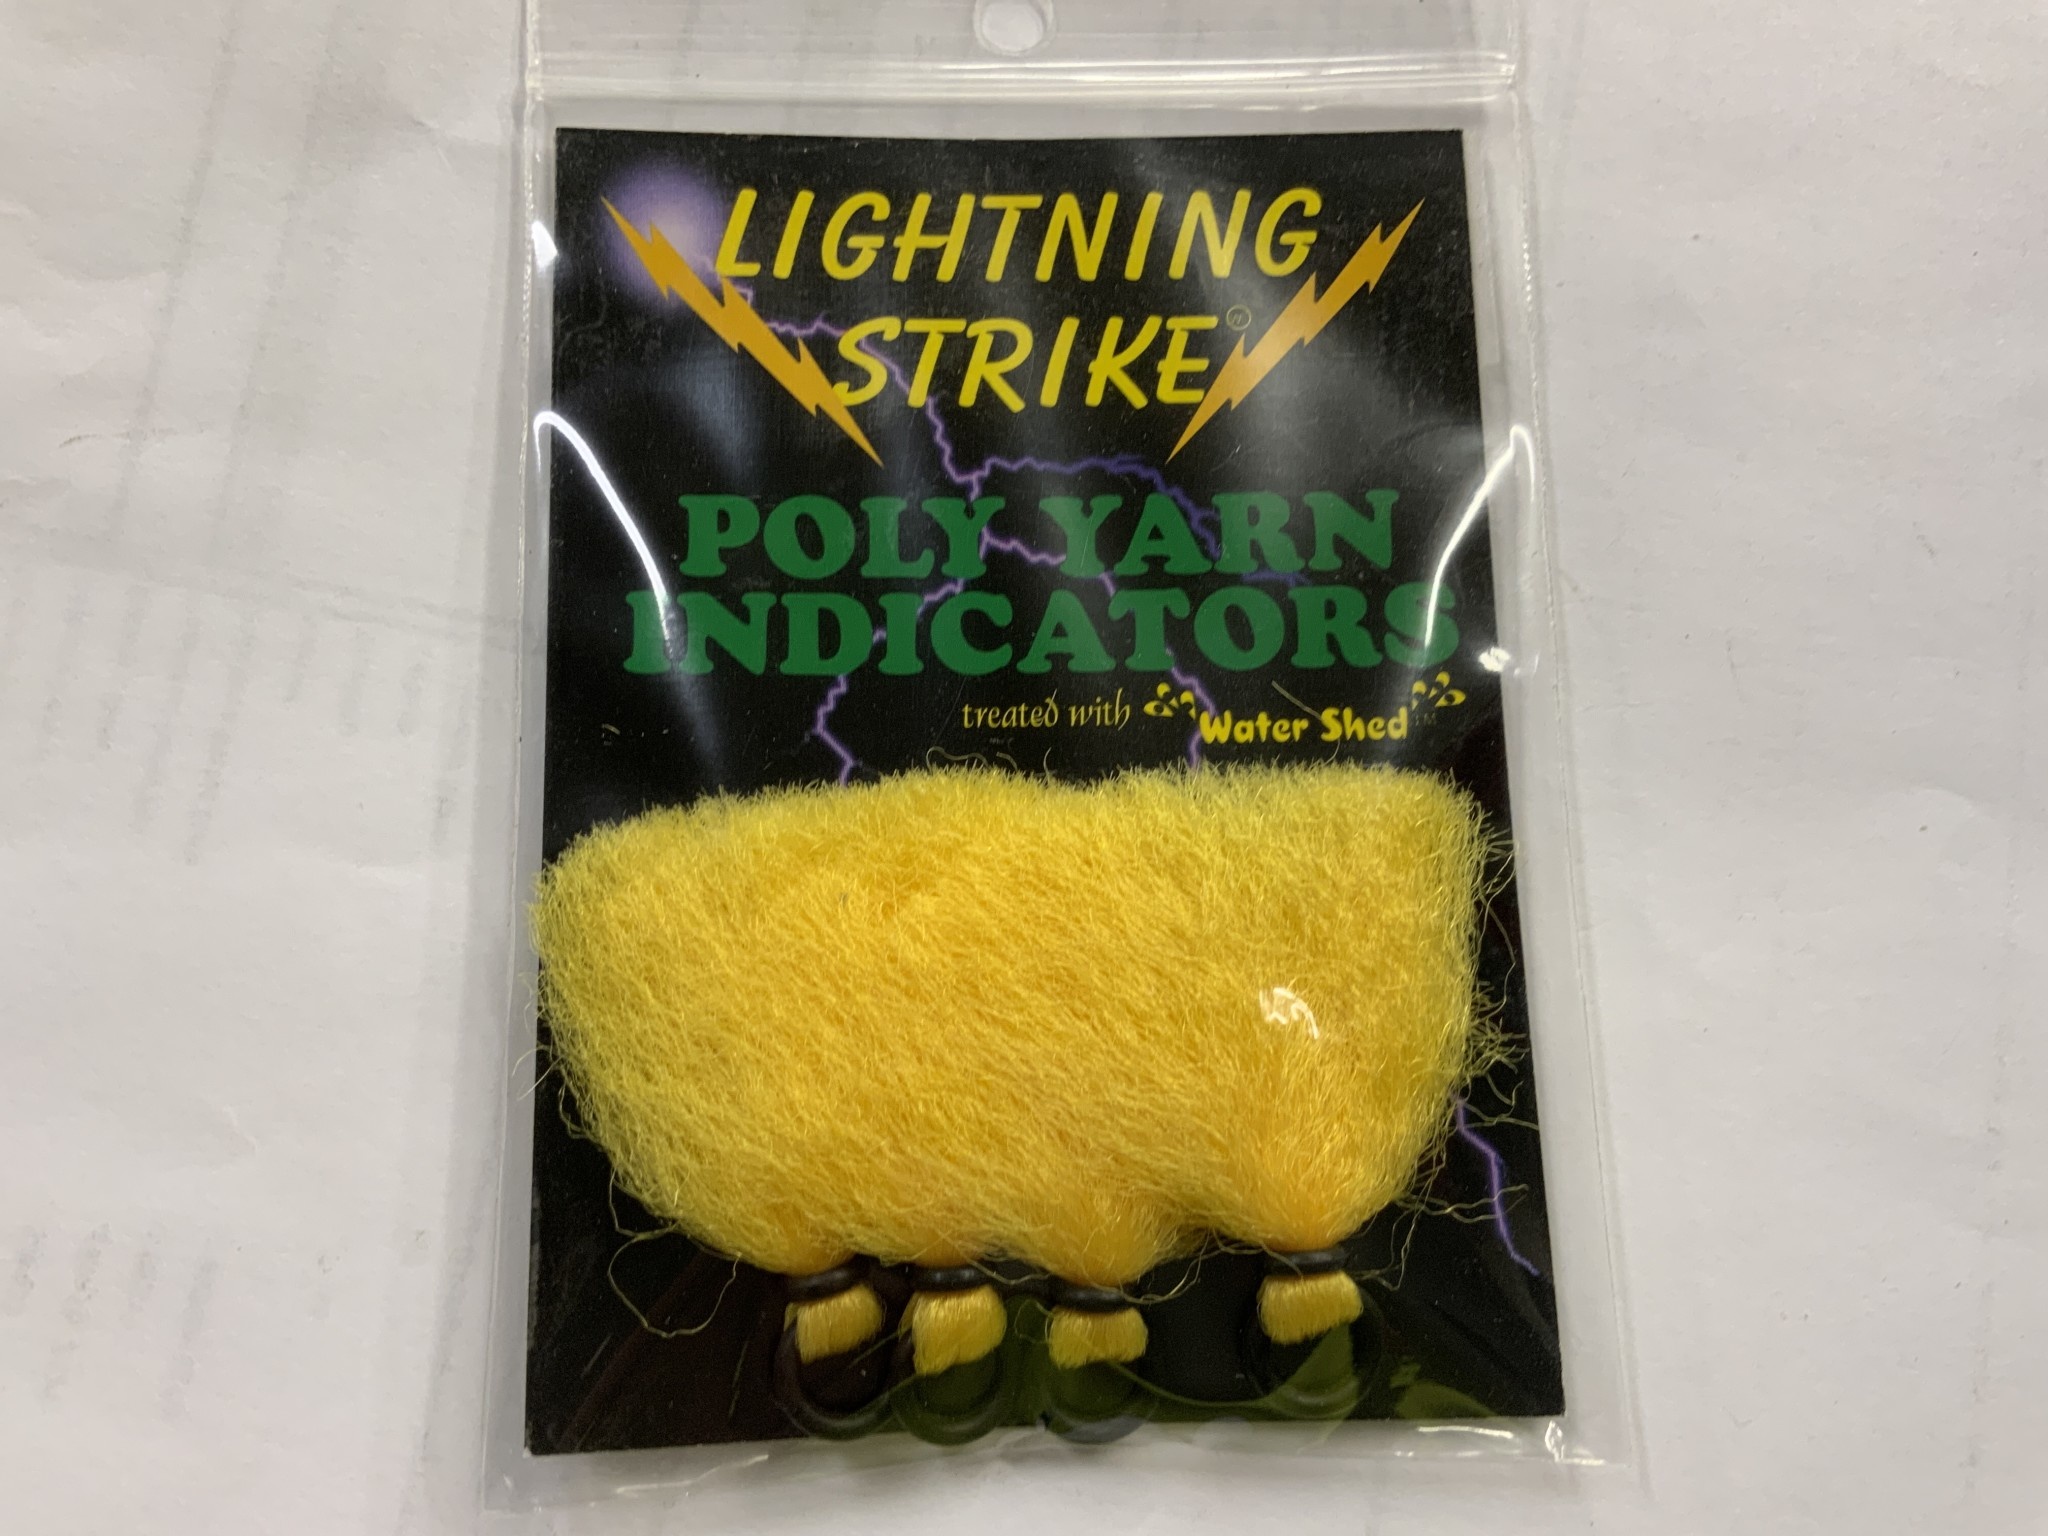 Lightning Strike Indicator Yarn